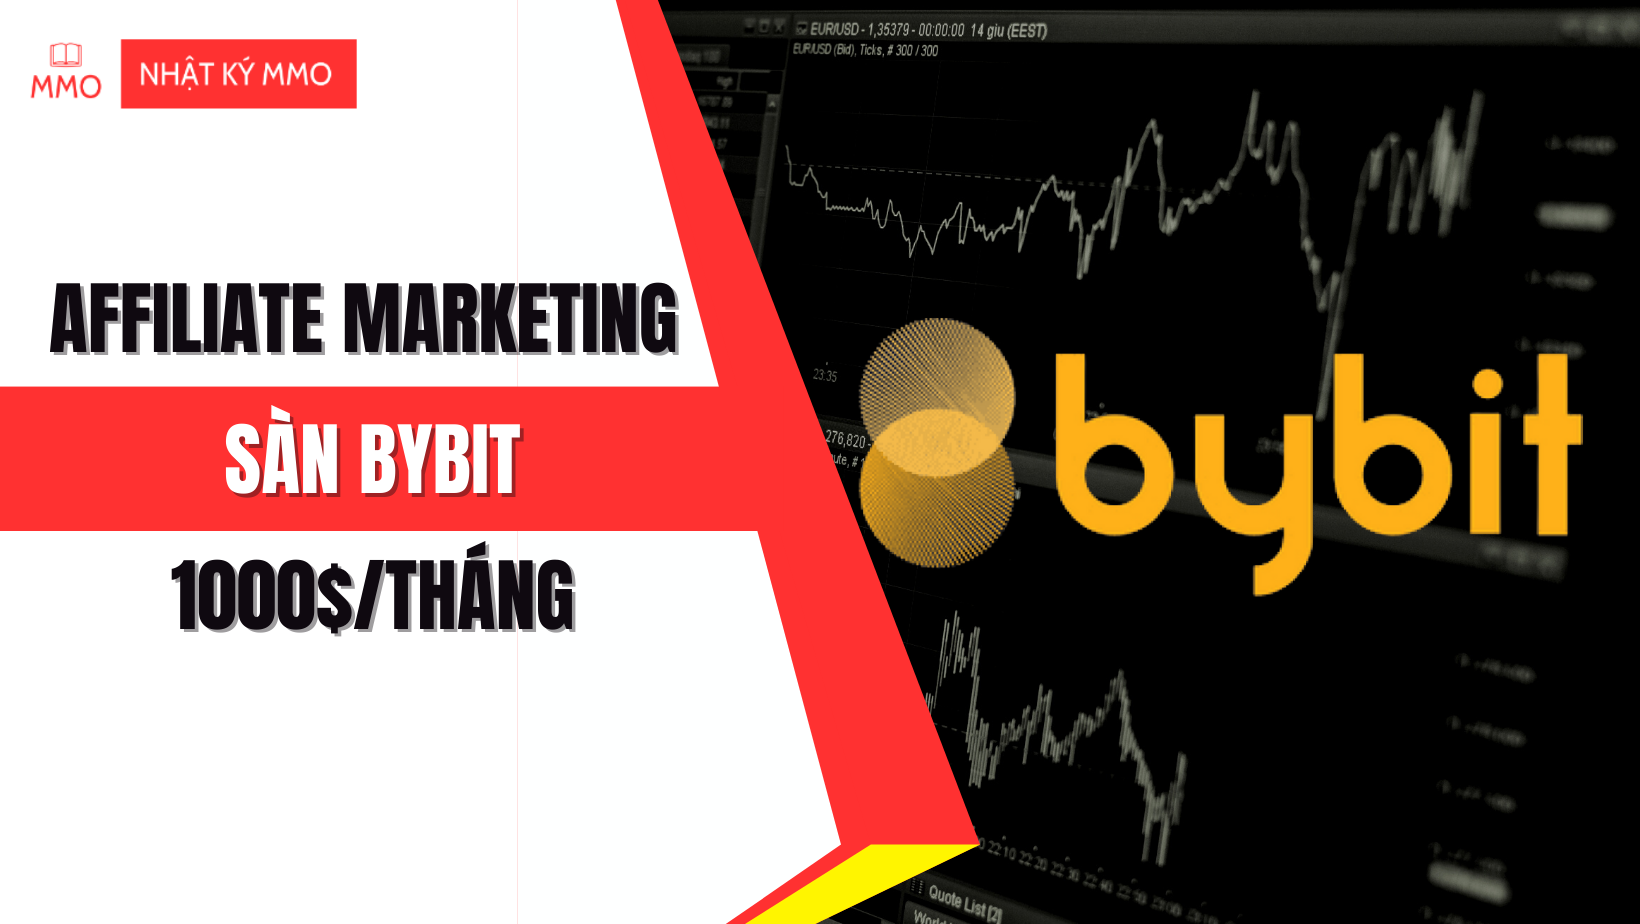 Hướng dẫn chi tiết triển khai Affiliate Marketing Sàn Bybit – Kiếm 1000$/tháng từ Freetraffic